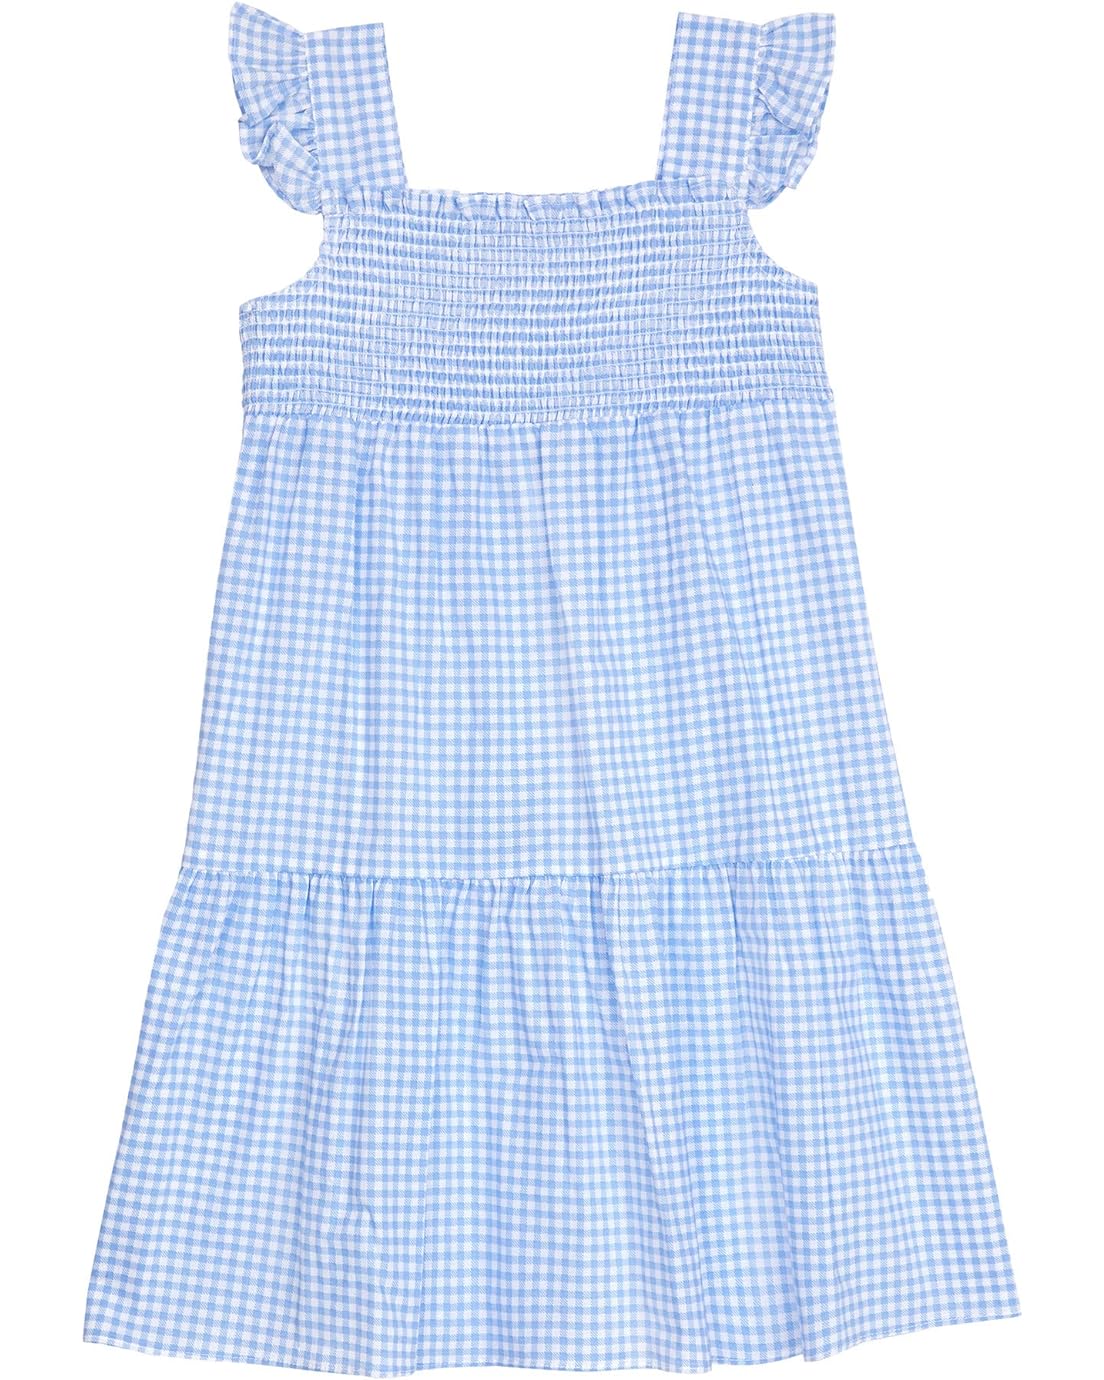 Eileen West Grace Dress (Toddleru002FLittle Kids)